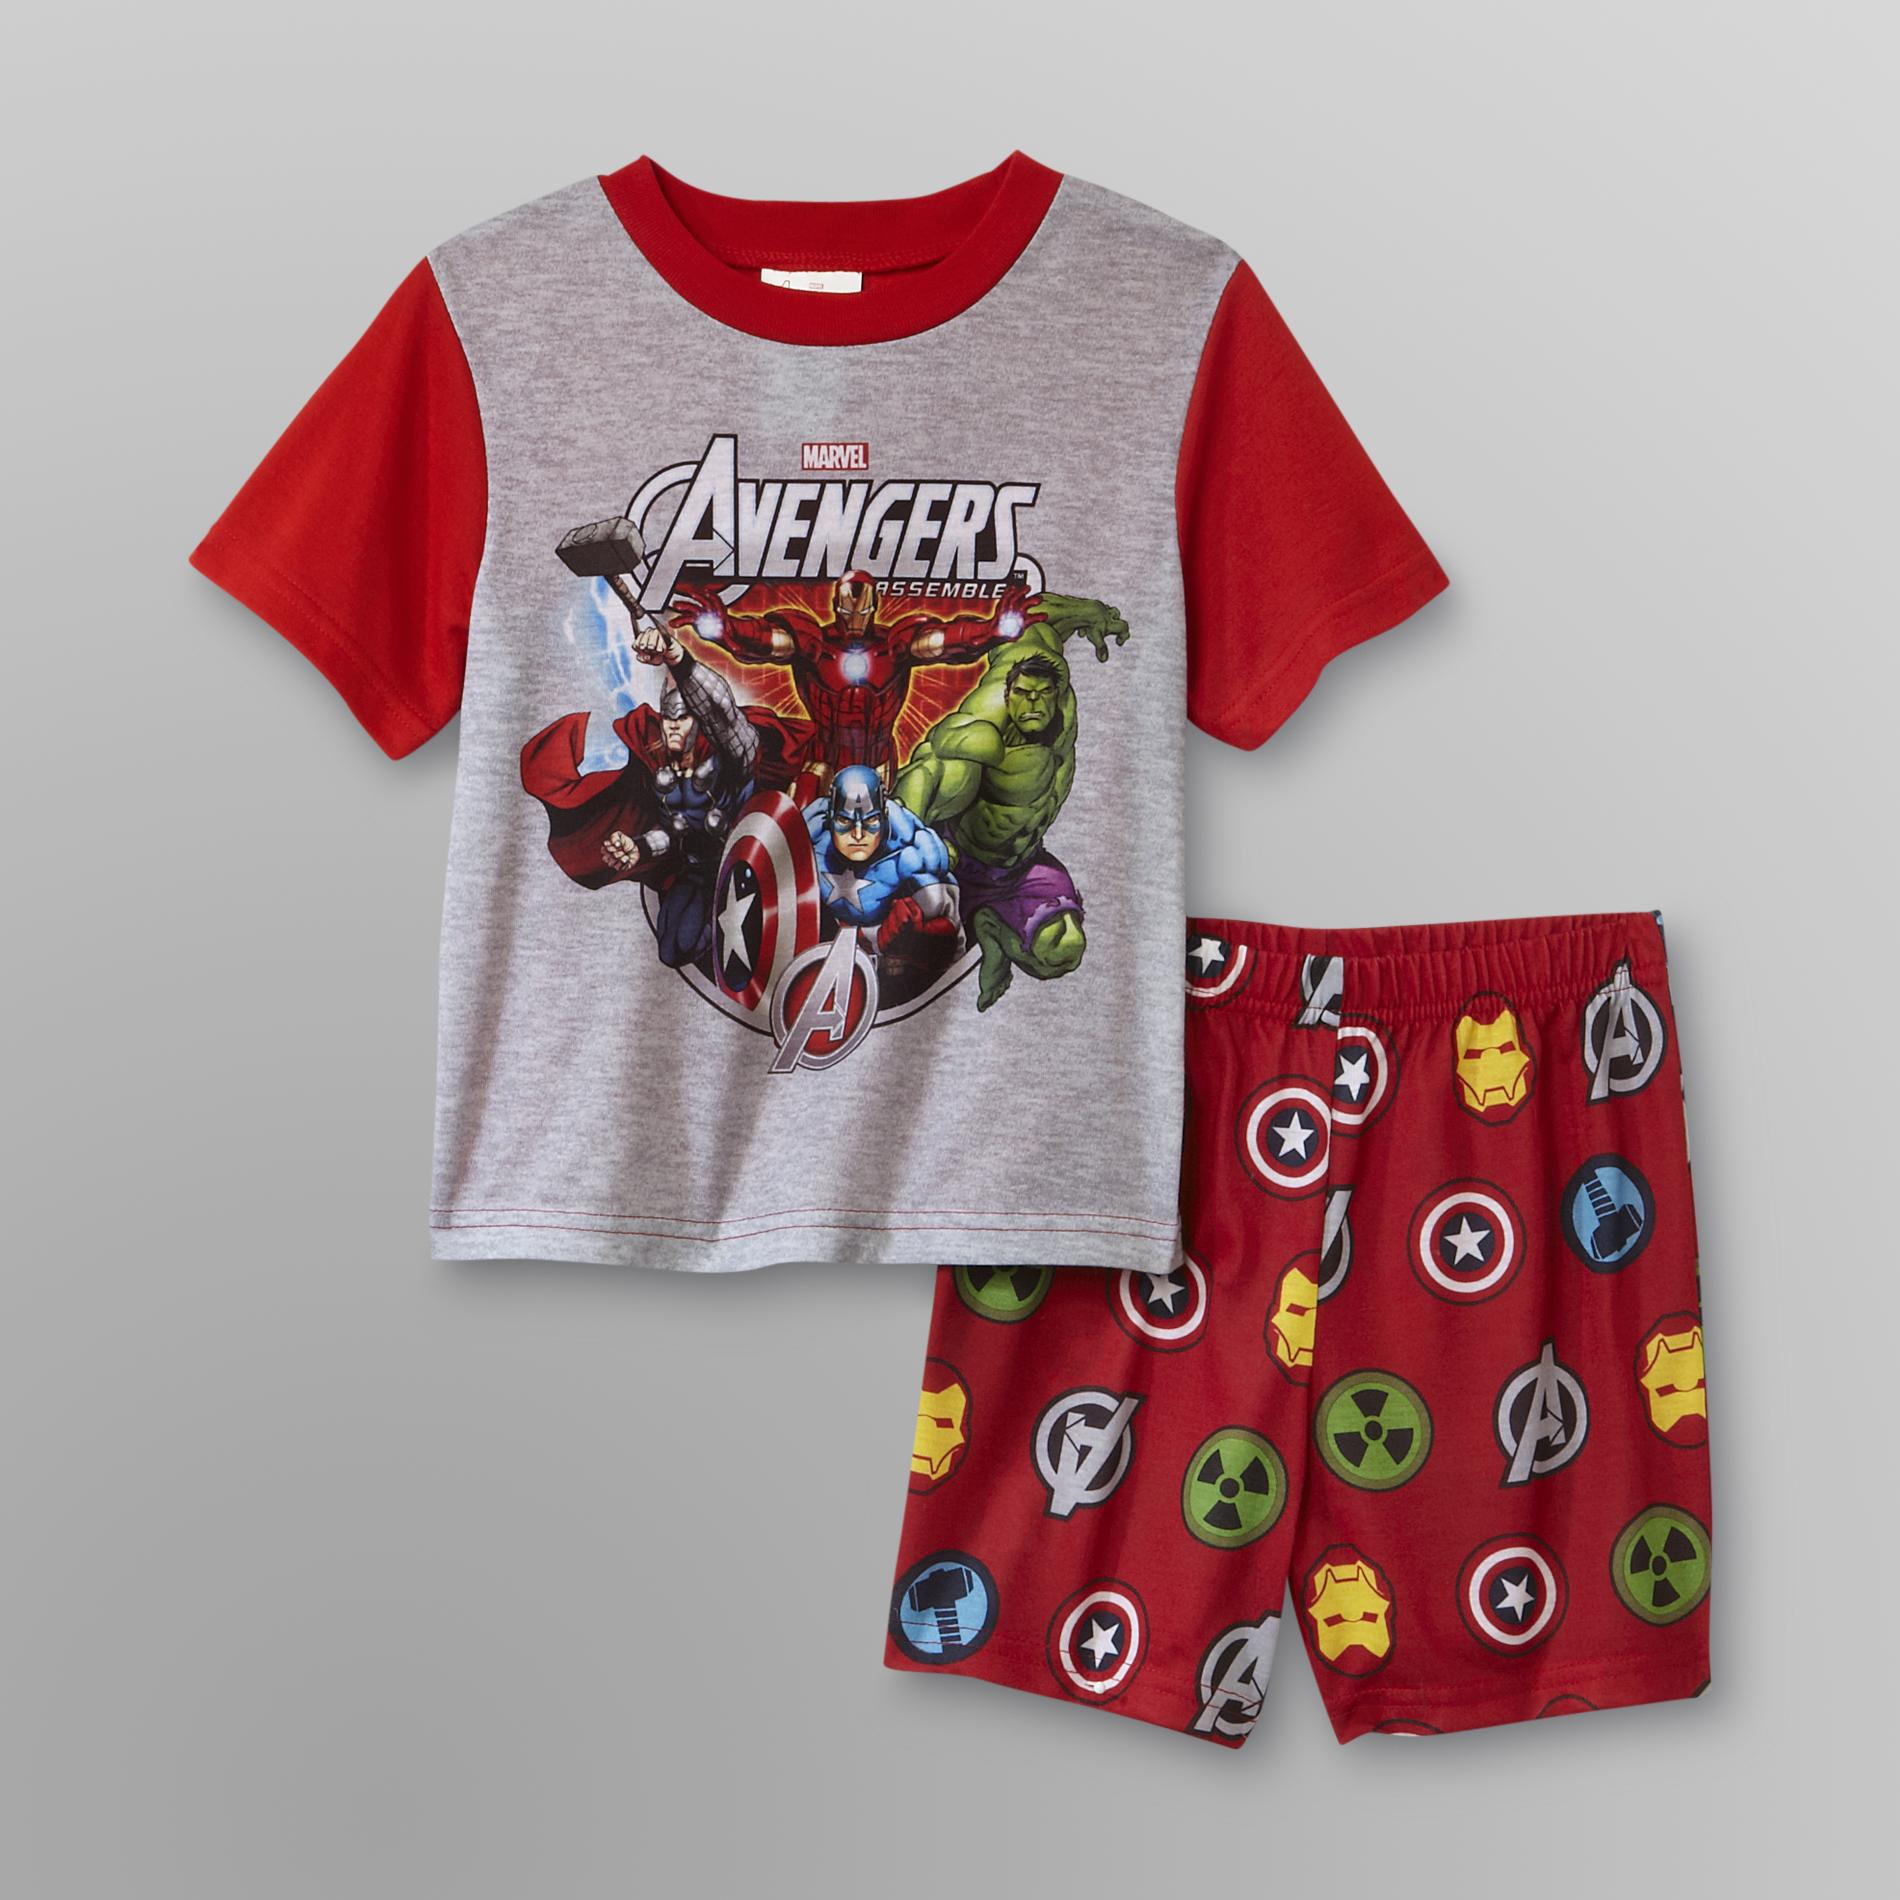 Marvel Avengers Assemble Toddler Boy's Pajamas